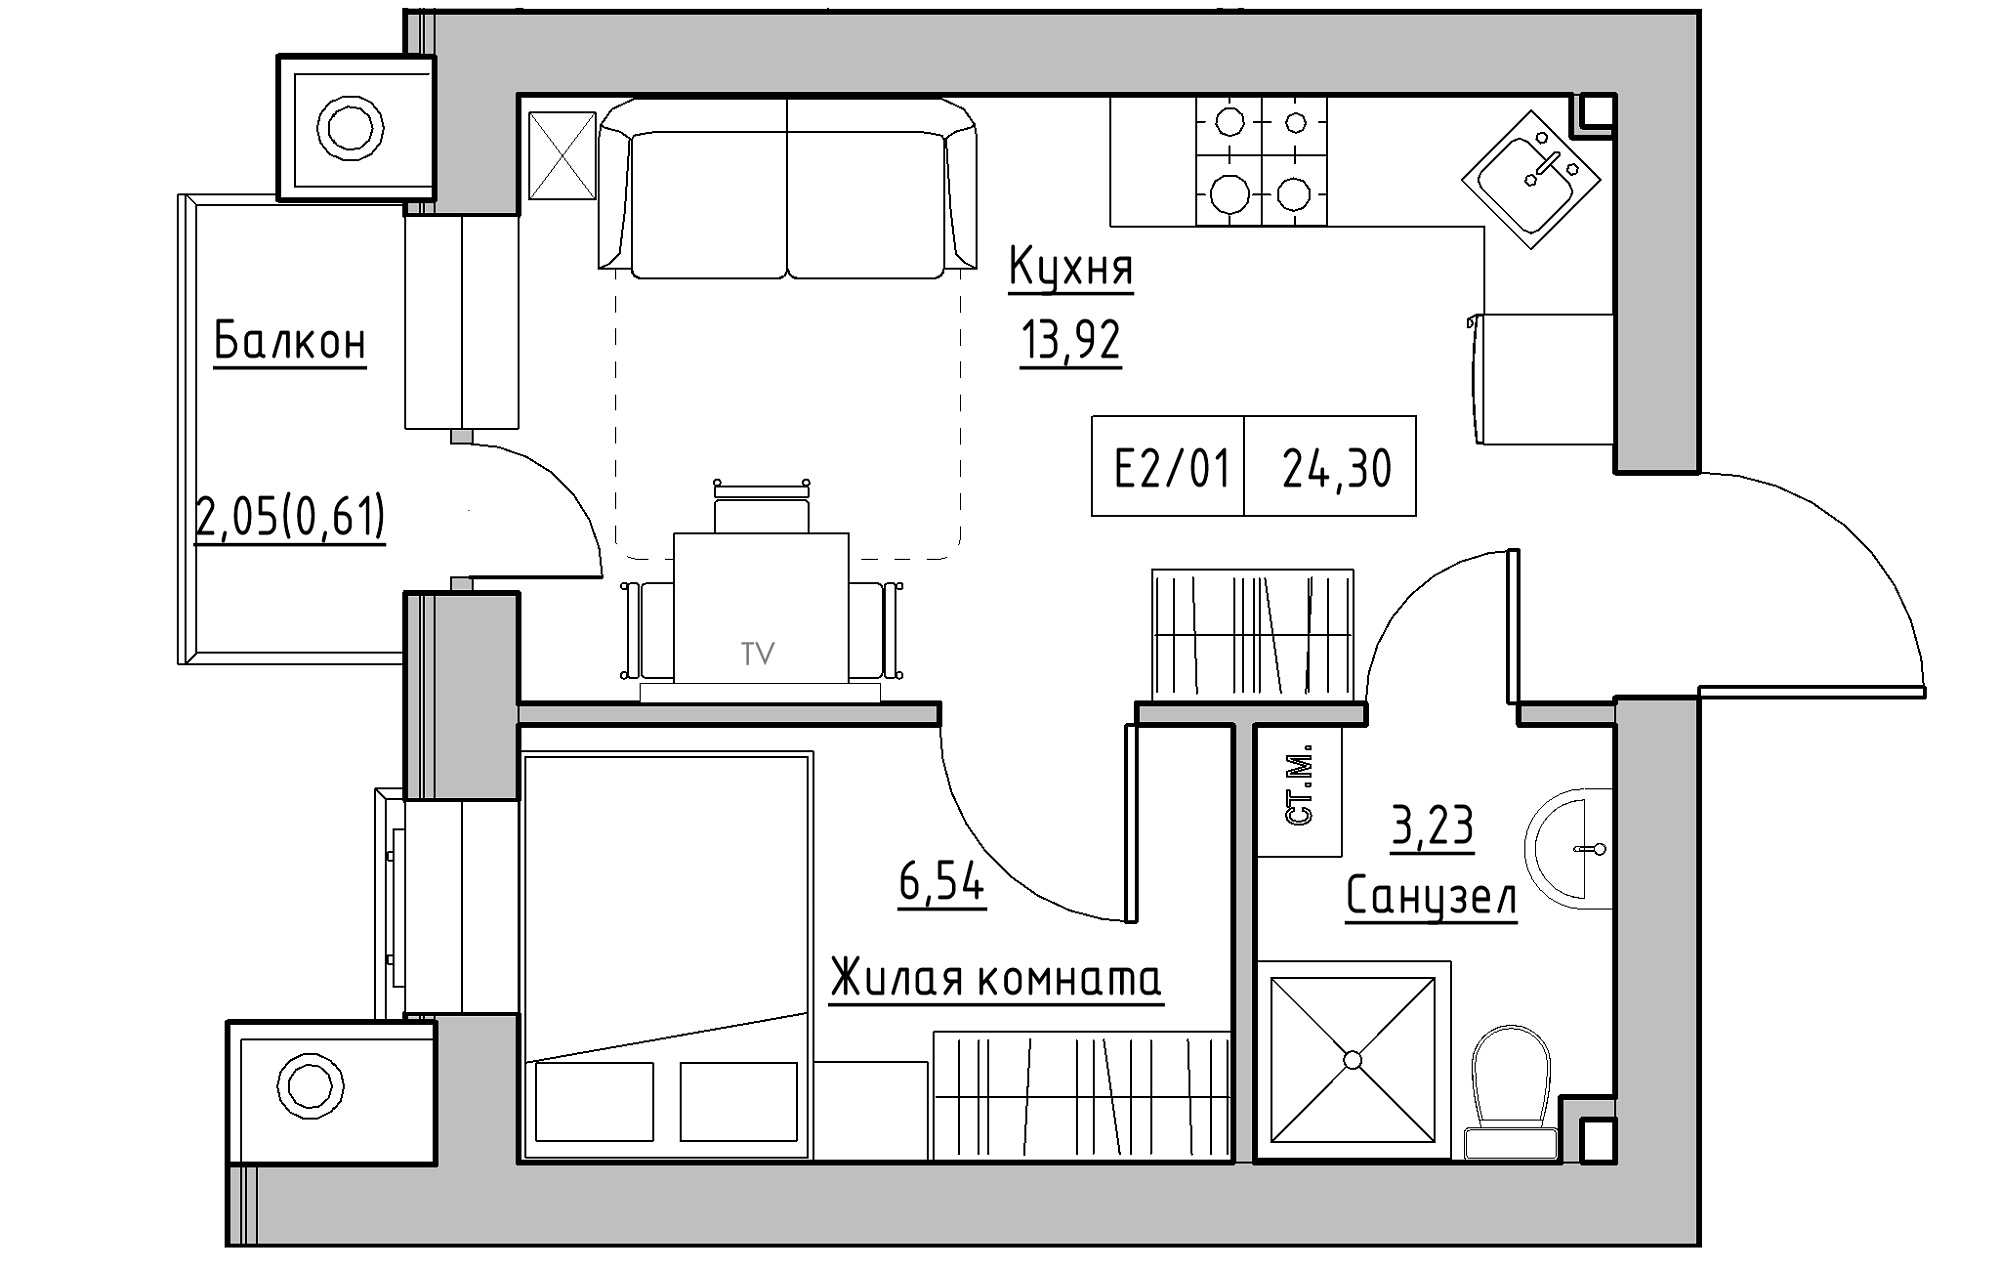 Planning 1-rm flats area 24.3m2, KS-013-04/0005.